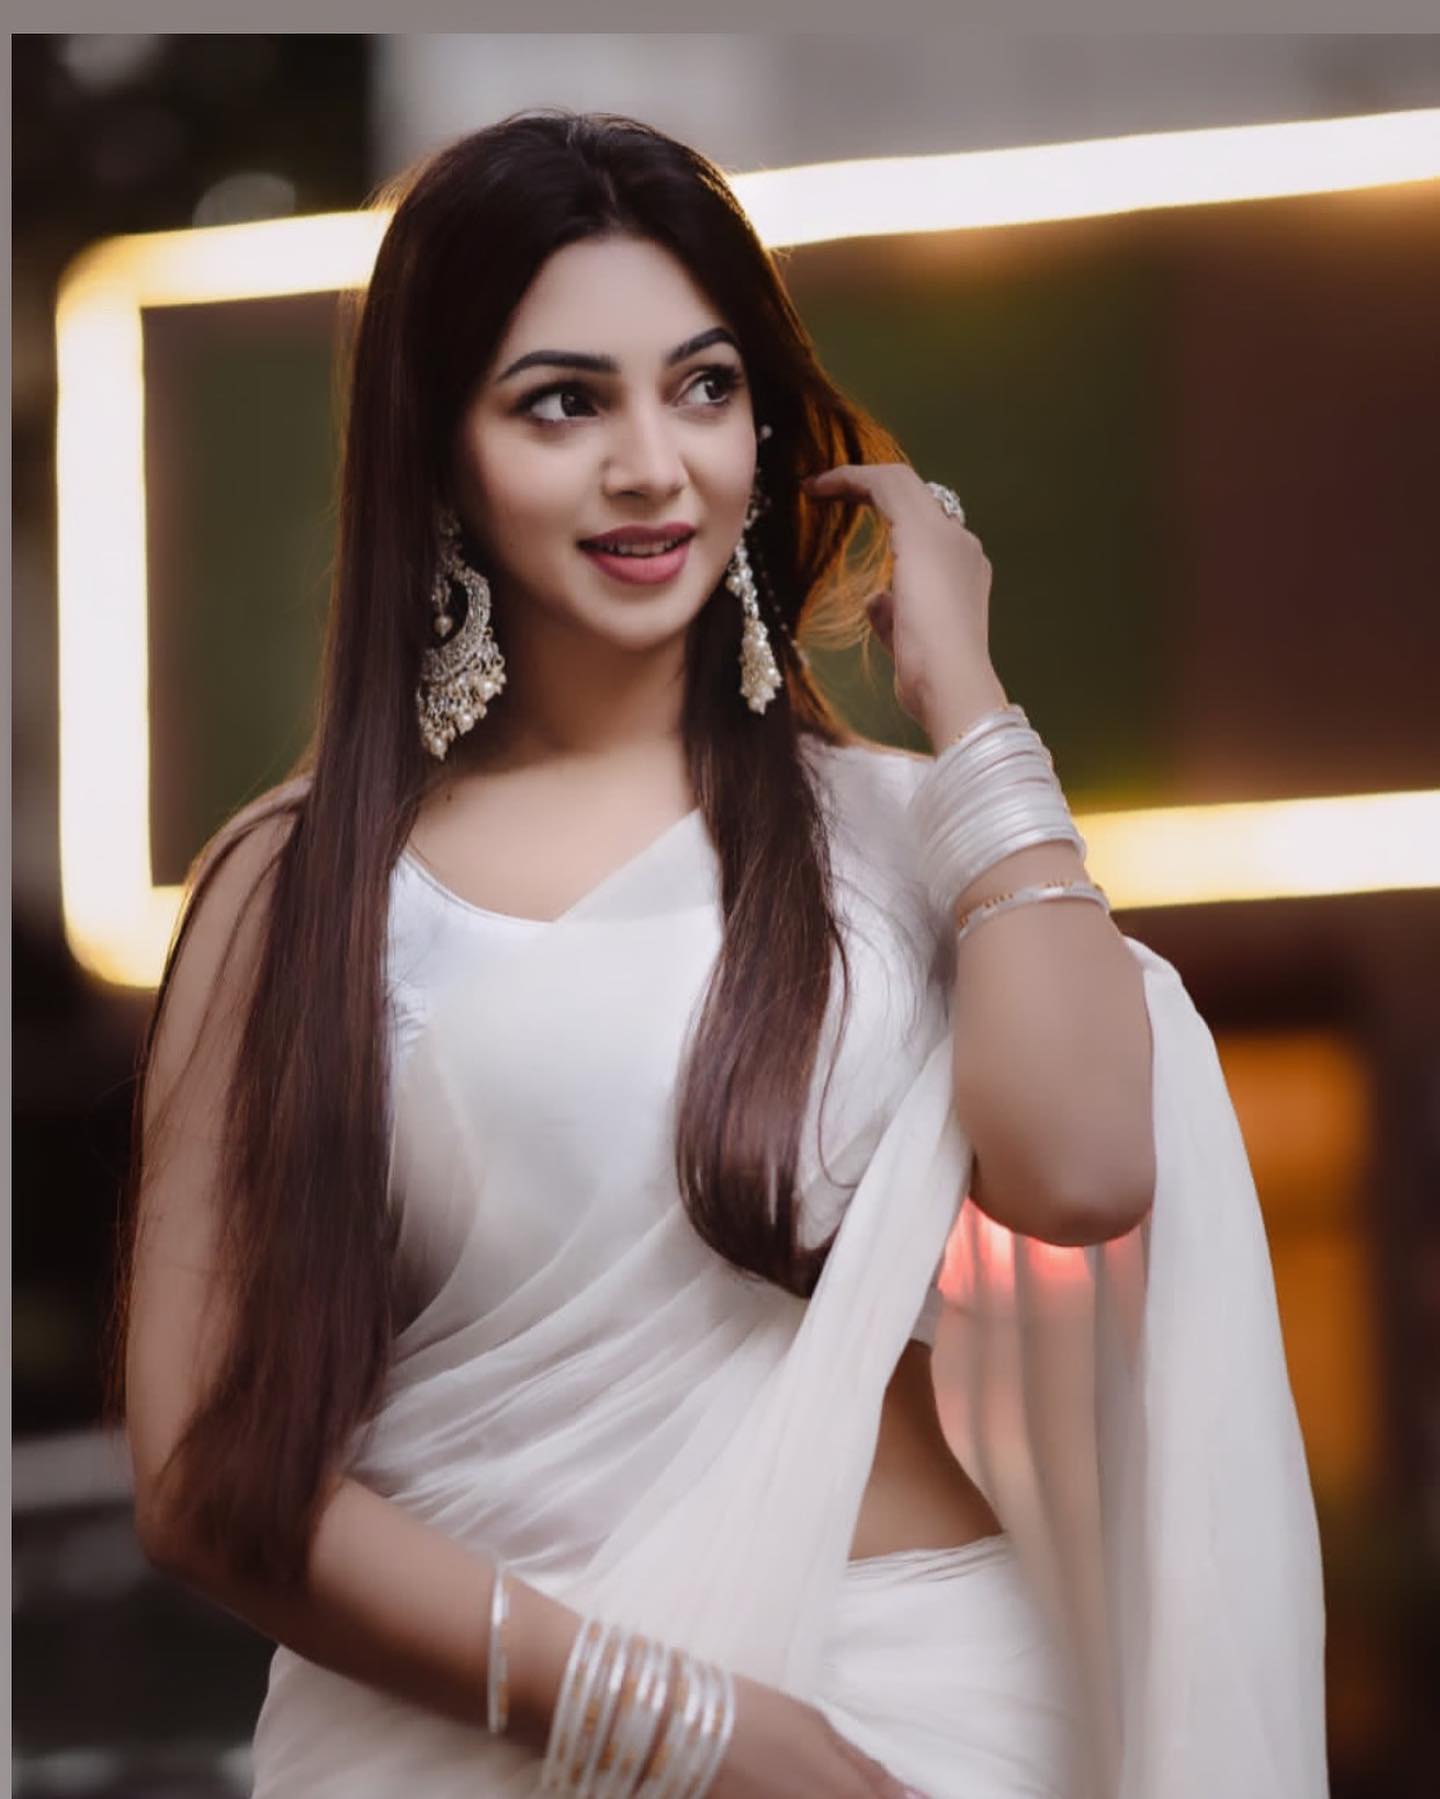 Bangla Model Porva Sex Video - Sadia Jahan Prova Measurements Height Weight Bra Size Age Biography |  Celebrities Details